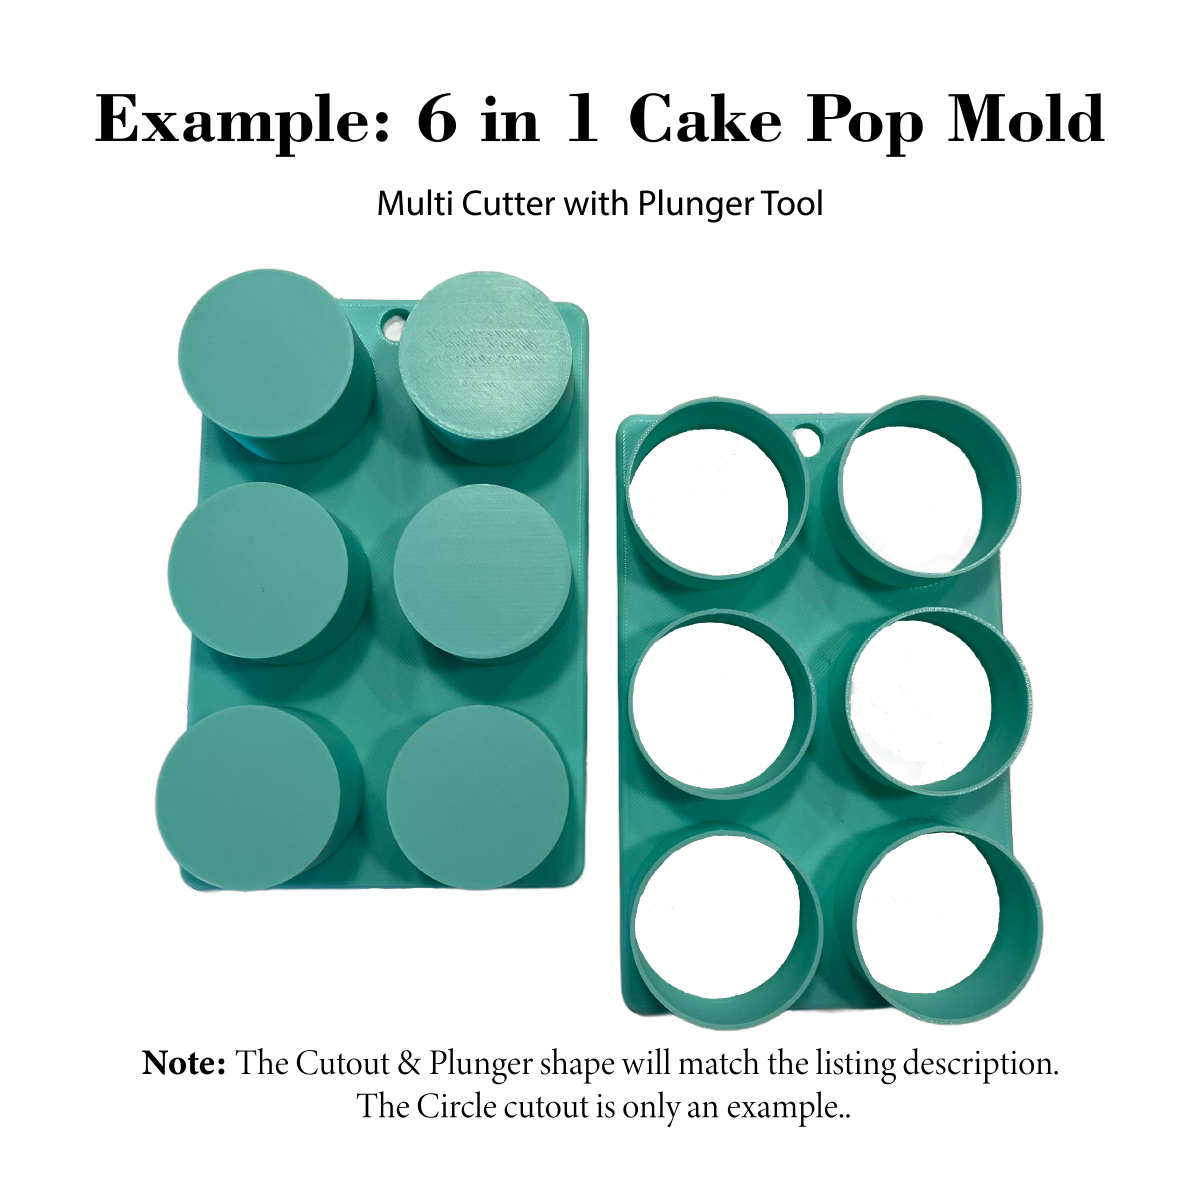 Mitten Cake Pop Mold | Single or Multi-popper